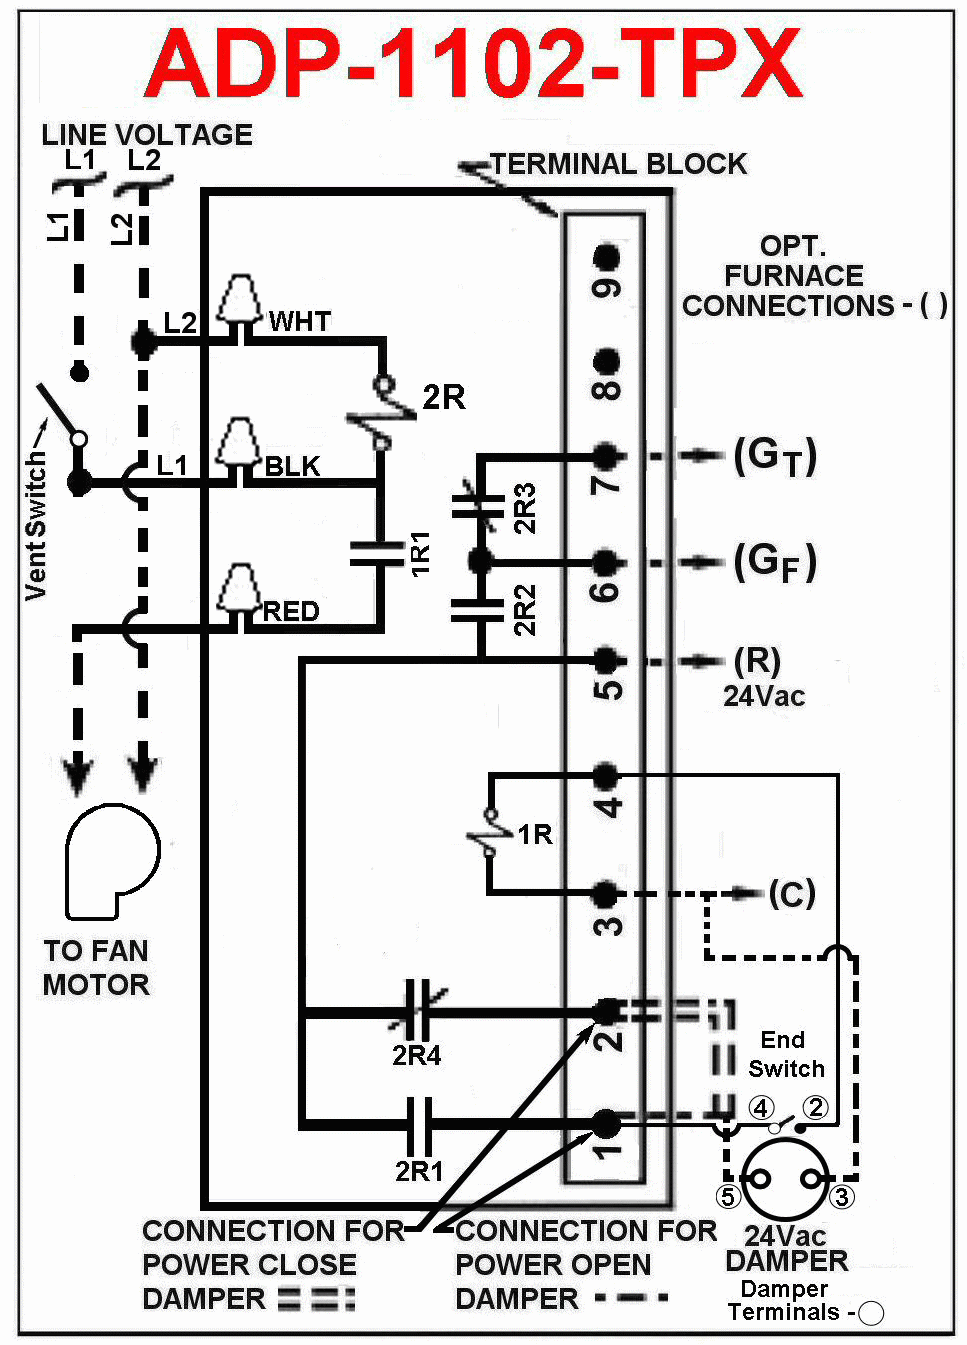 Hoyme-adp-1102-tpx-wiring-diagram